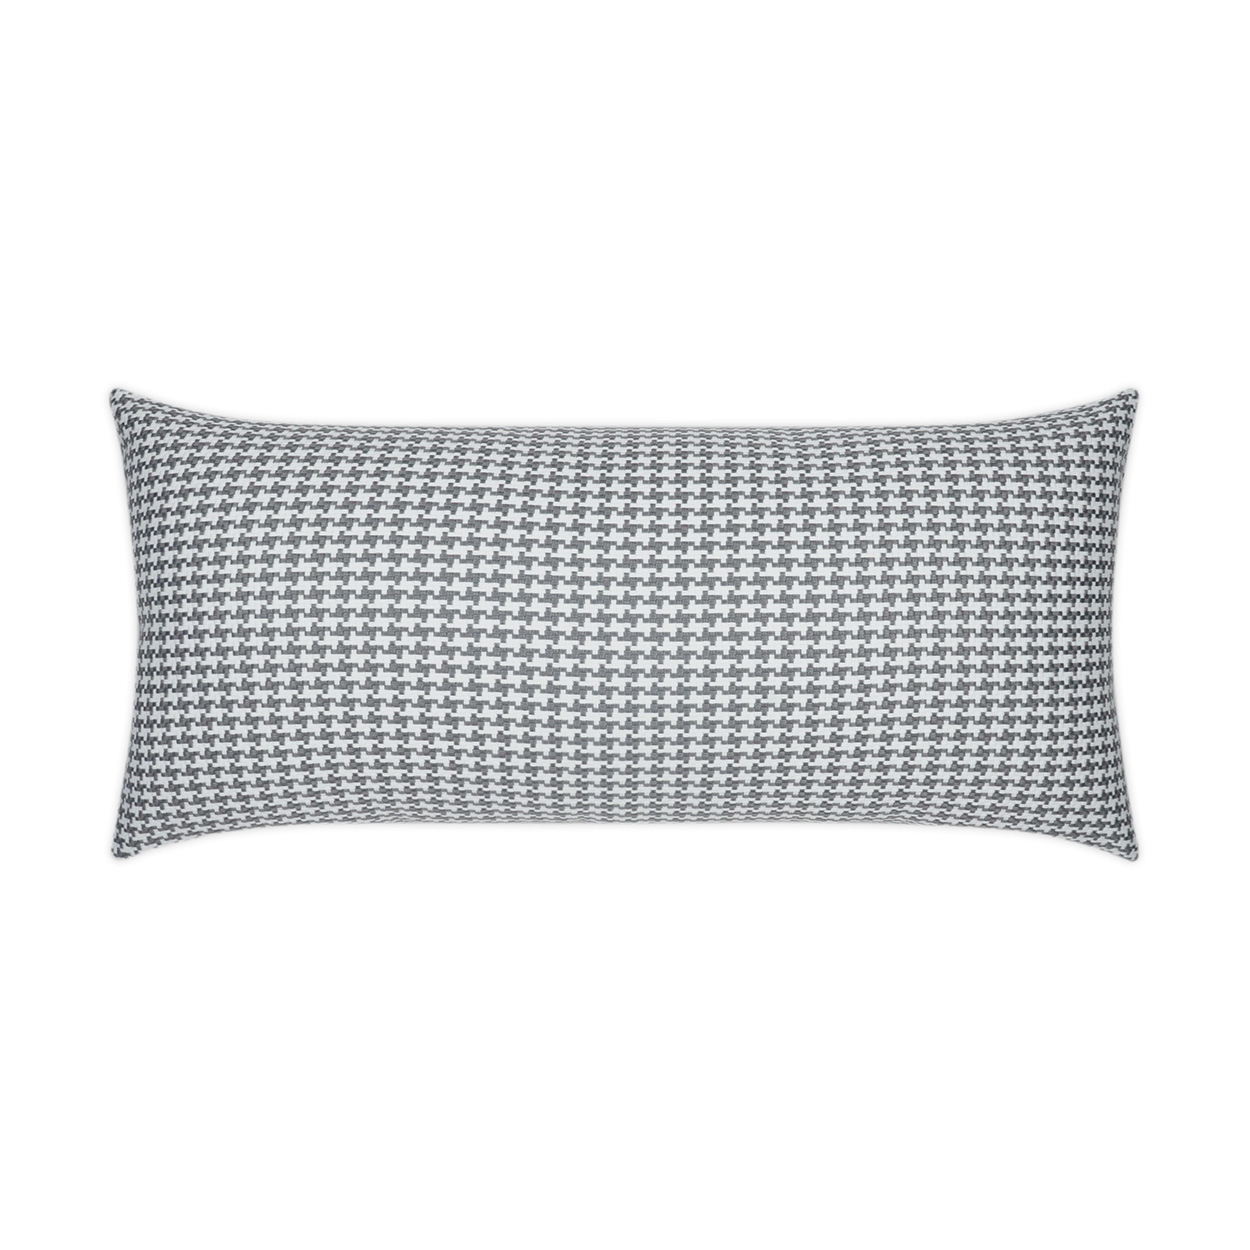 Bedford Stone Lumbar Outdoor Pillow 24x12